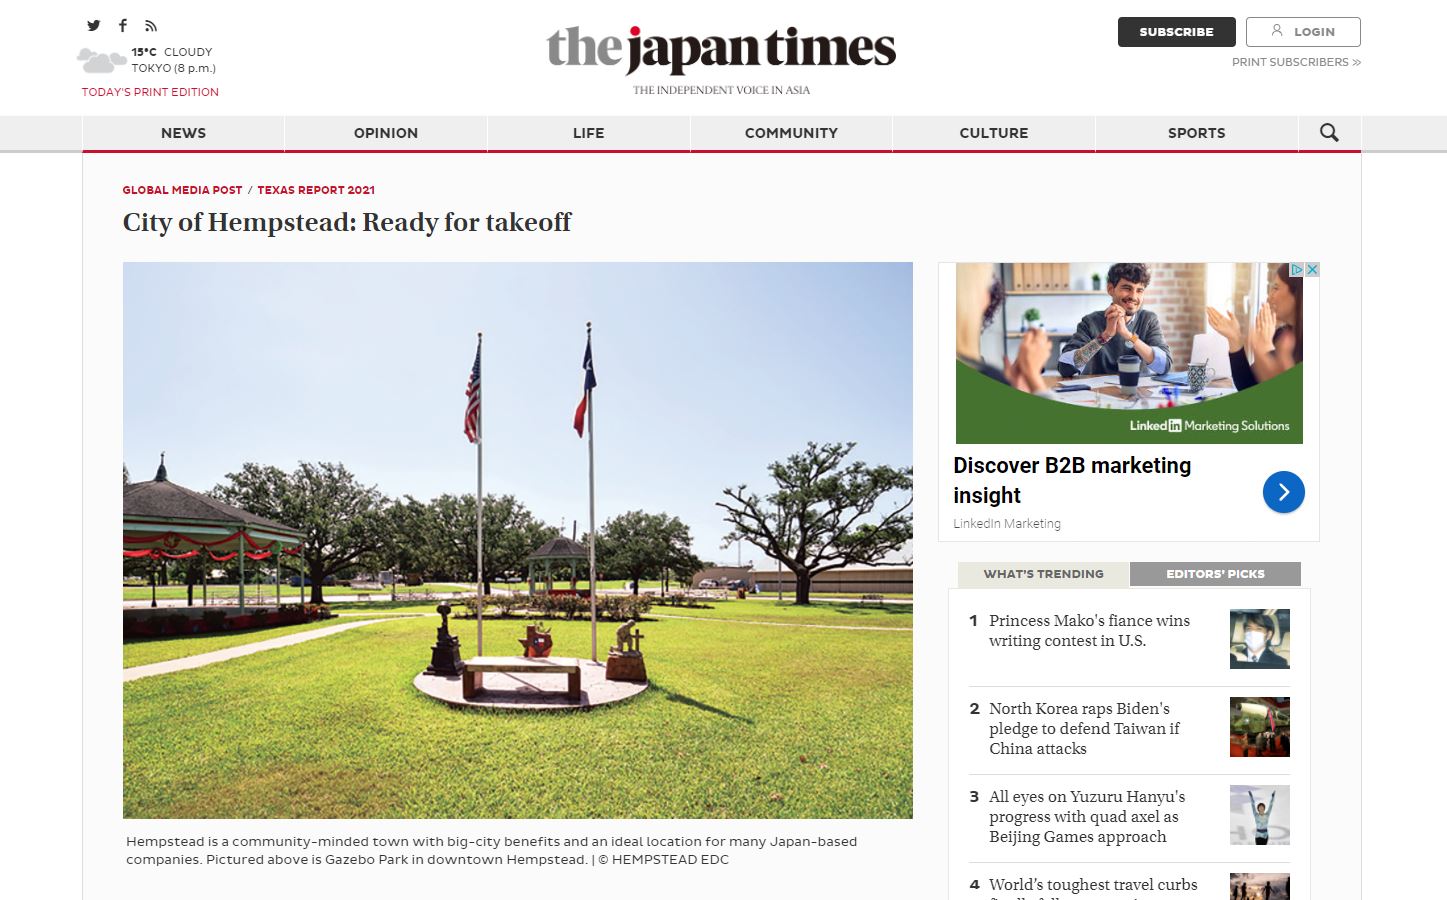 The Japan Times highlights Hempstead, Texas